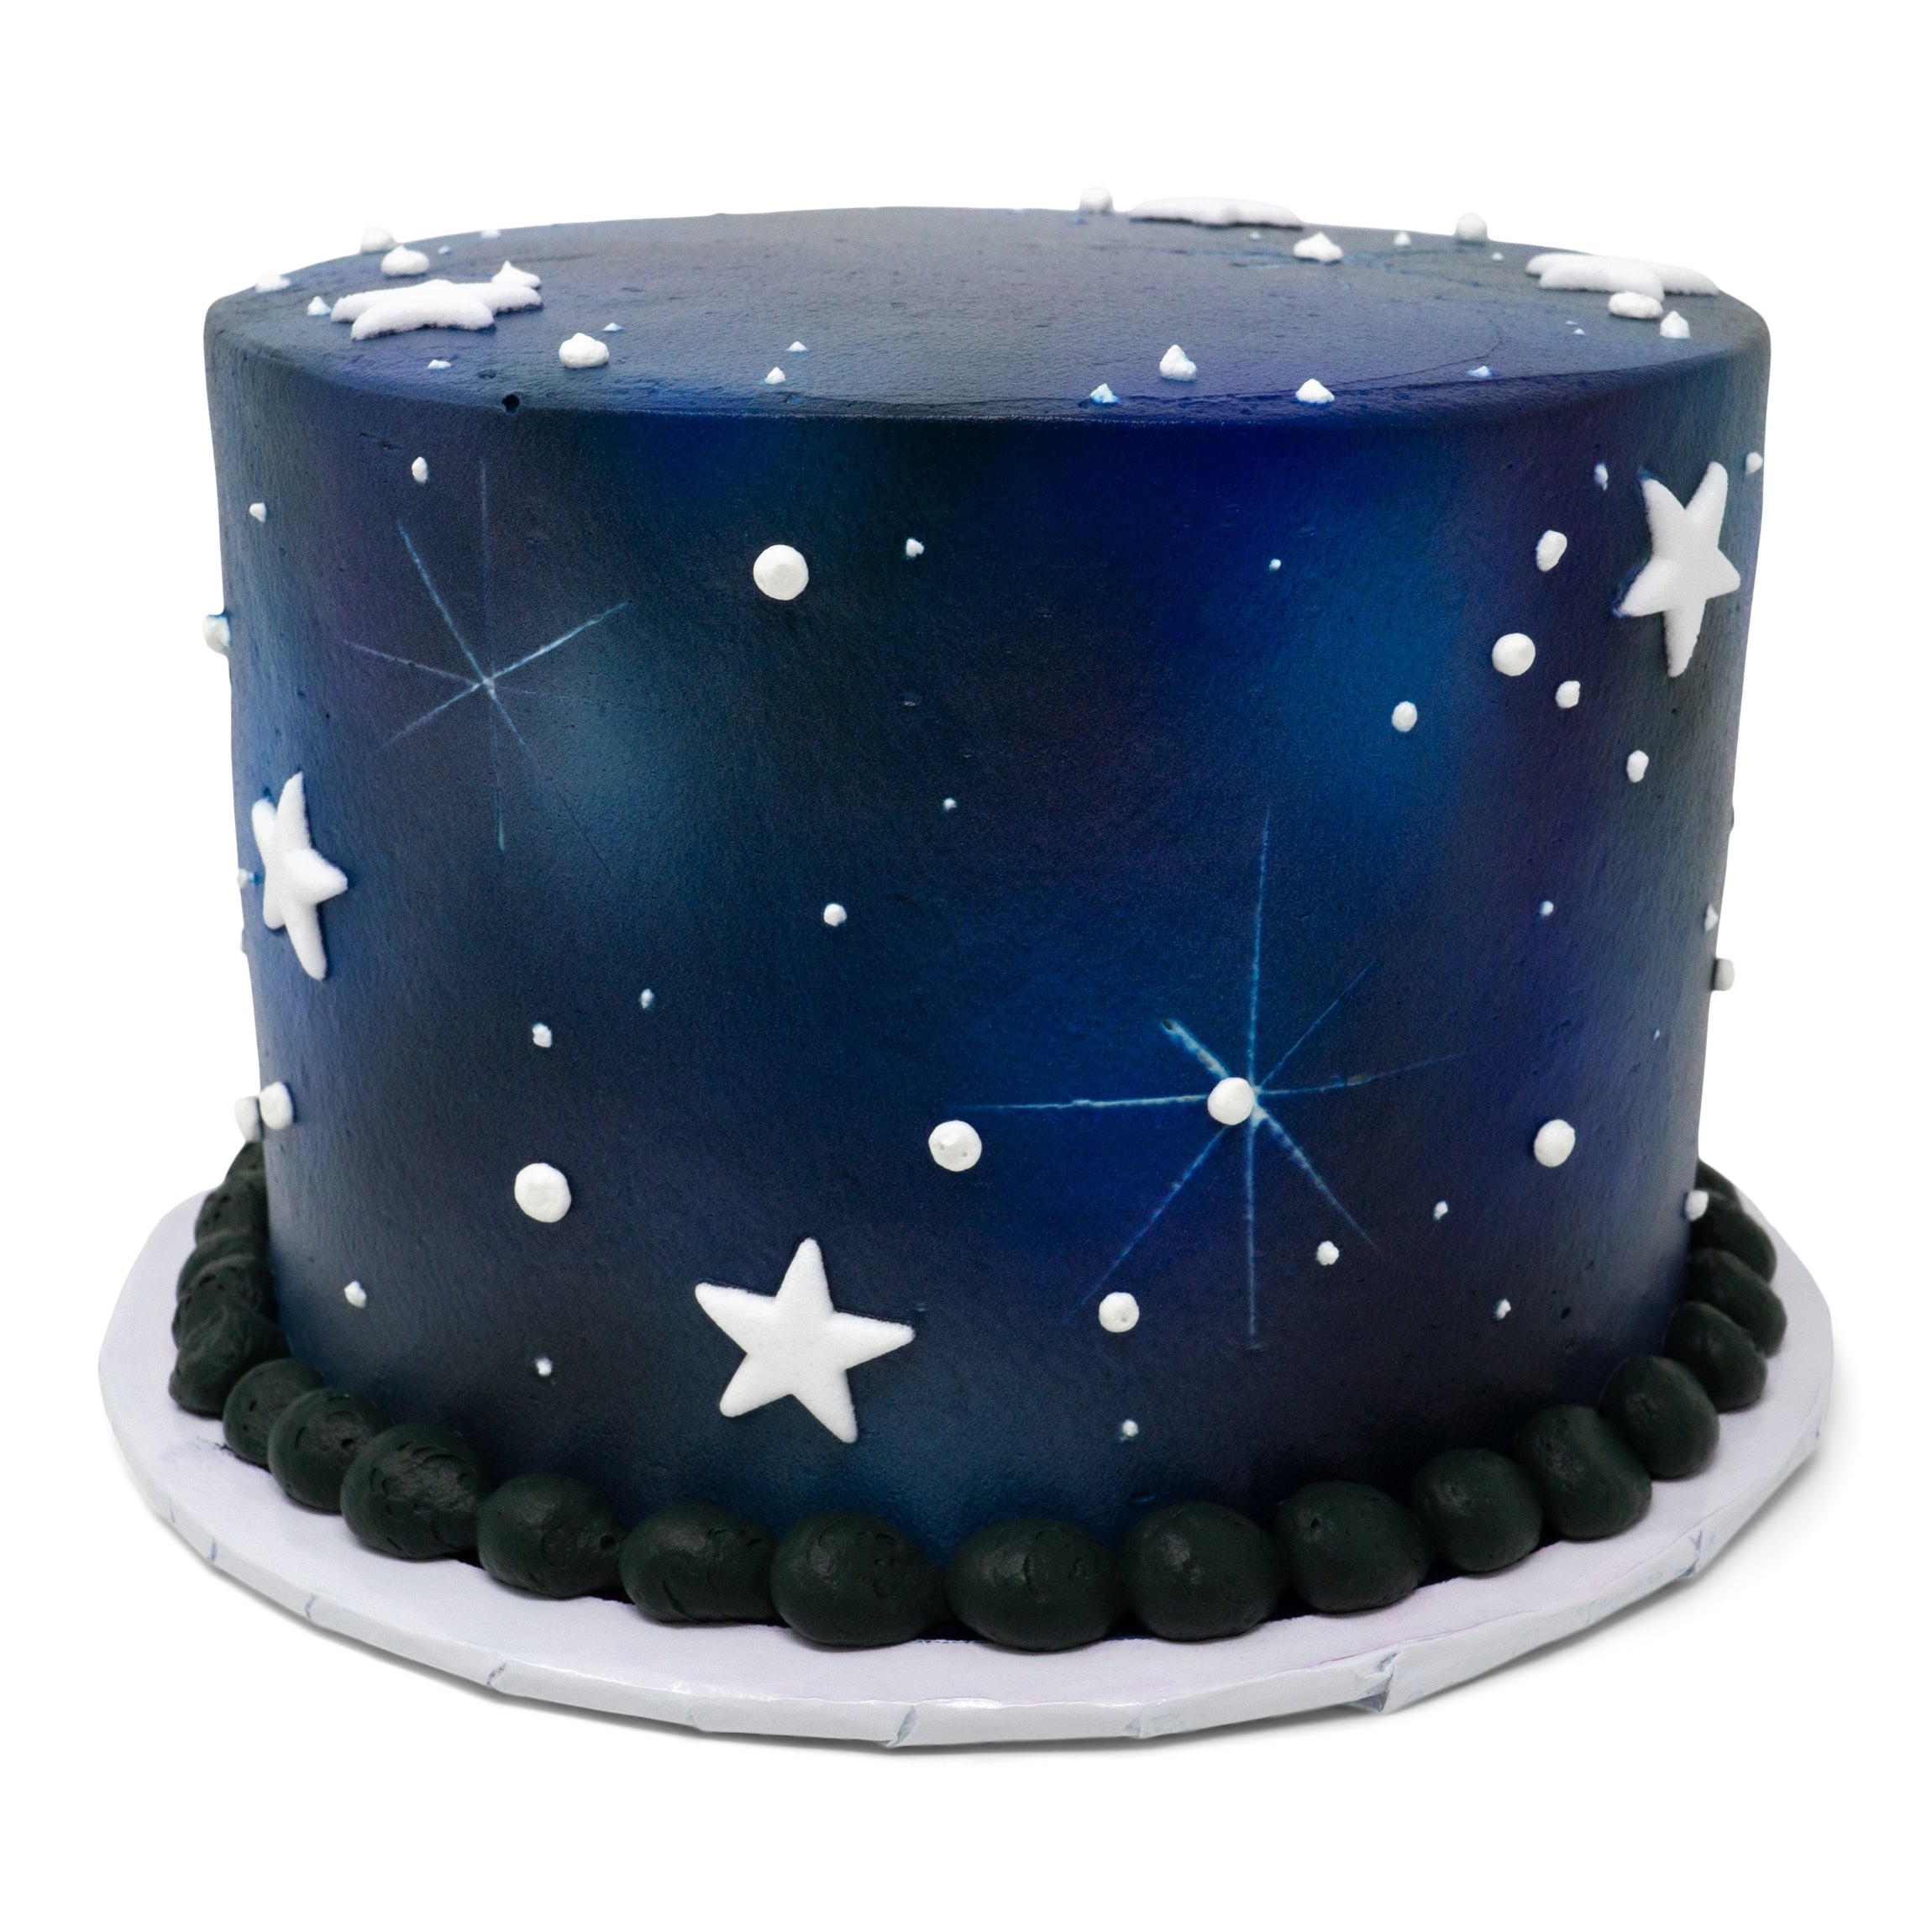 Galaxy Blue Birthday Cake Stock Photo 582870661 | Shutterstock